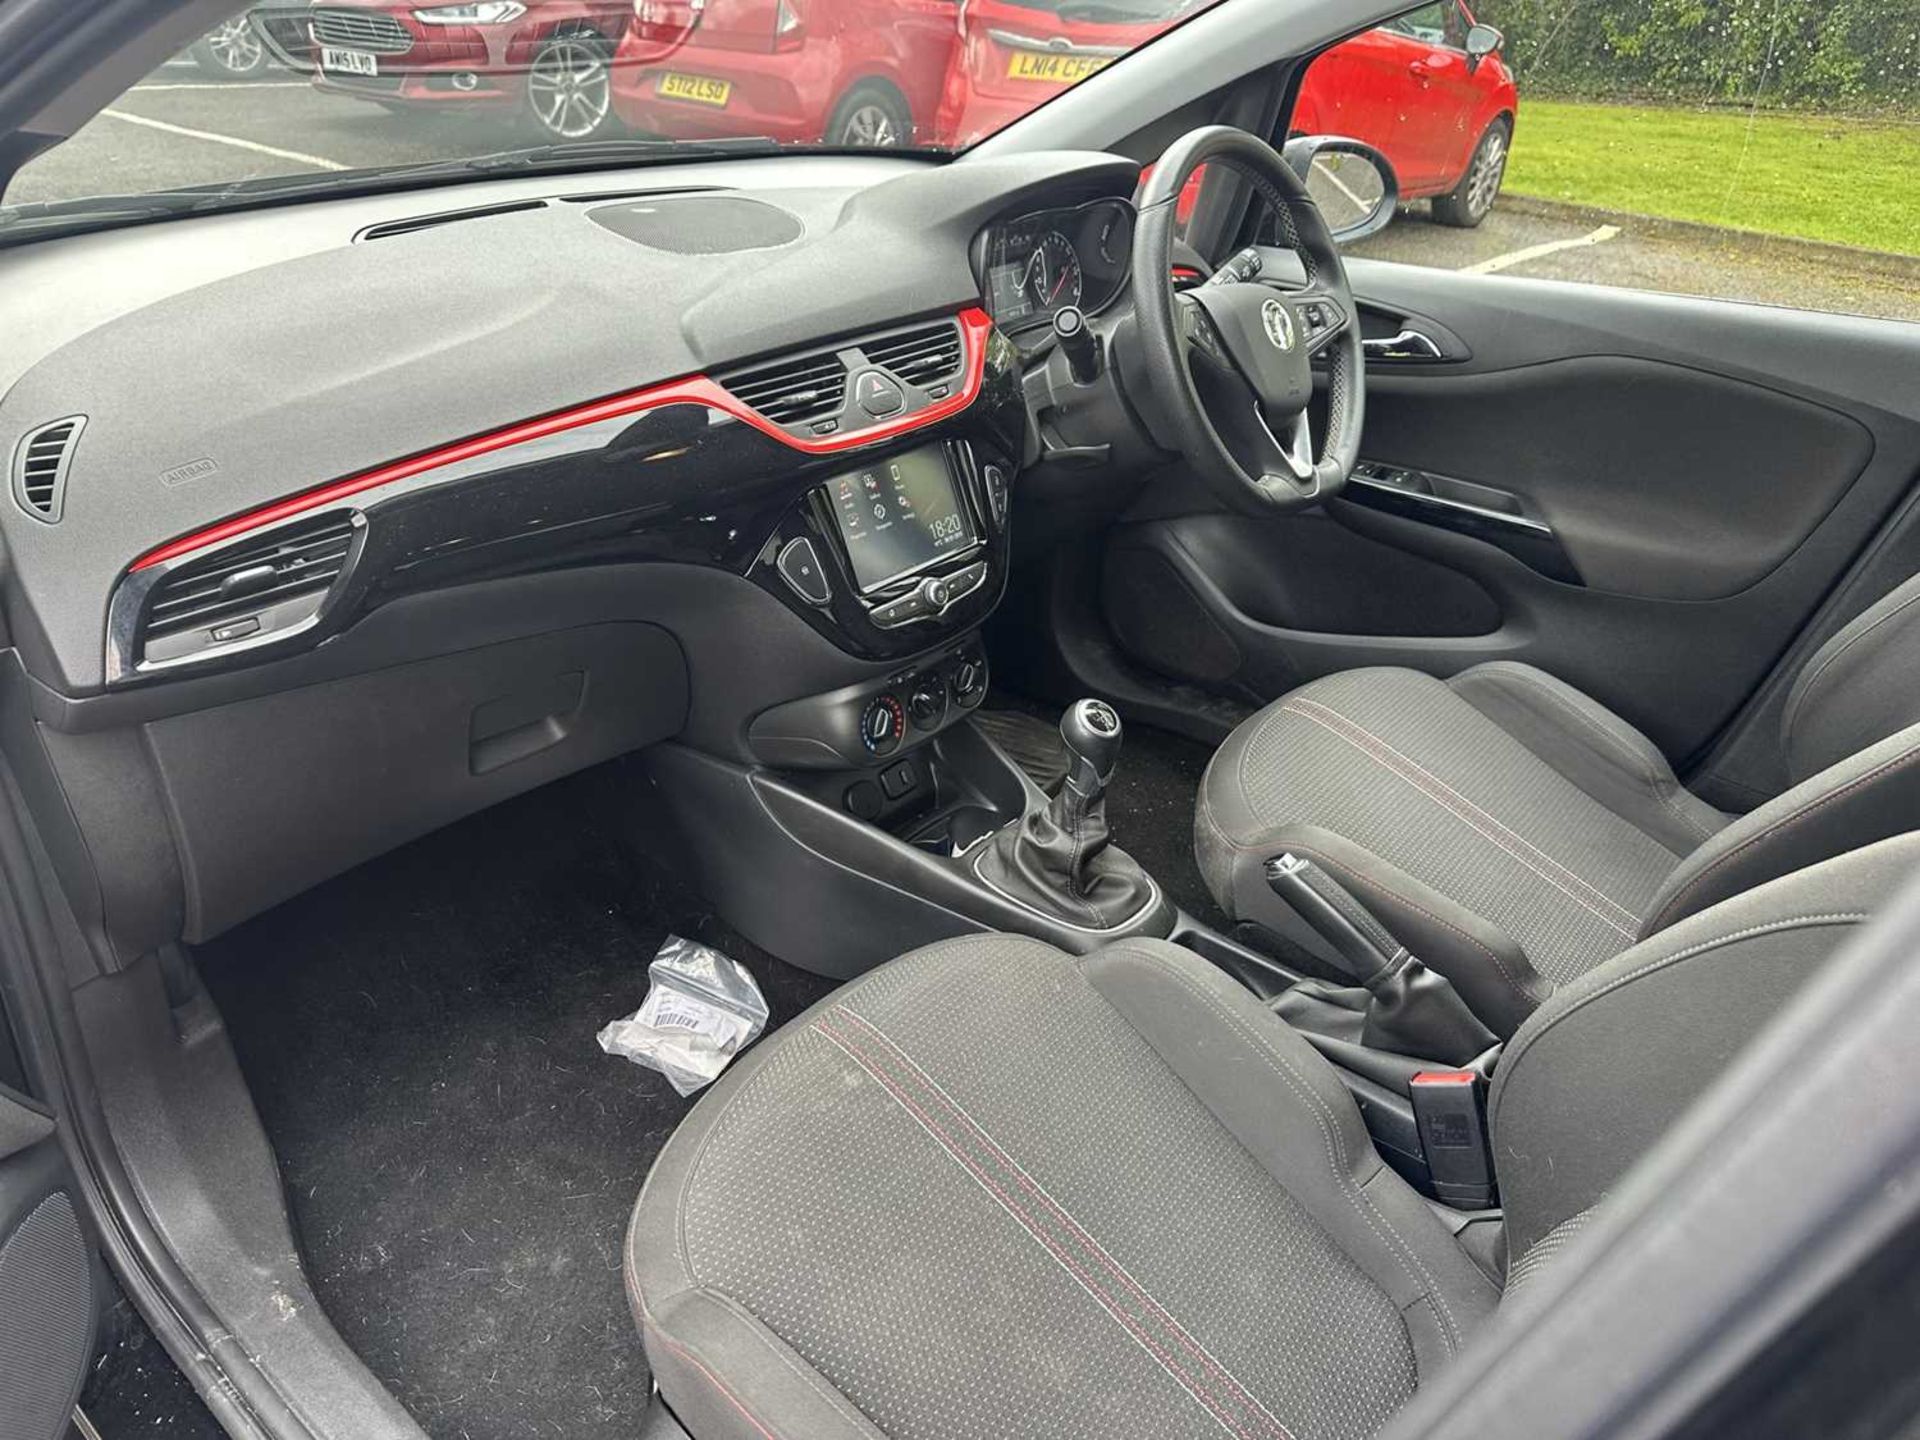 2019 Vauxhall Corsa SRI VX - Line Nav Black, 5 door hatchback, manual, reg. no. VU19 RYK - Bild 15 aus 15